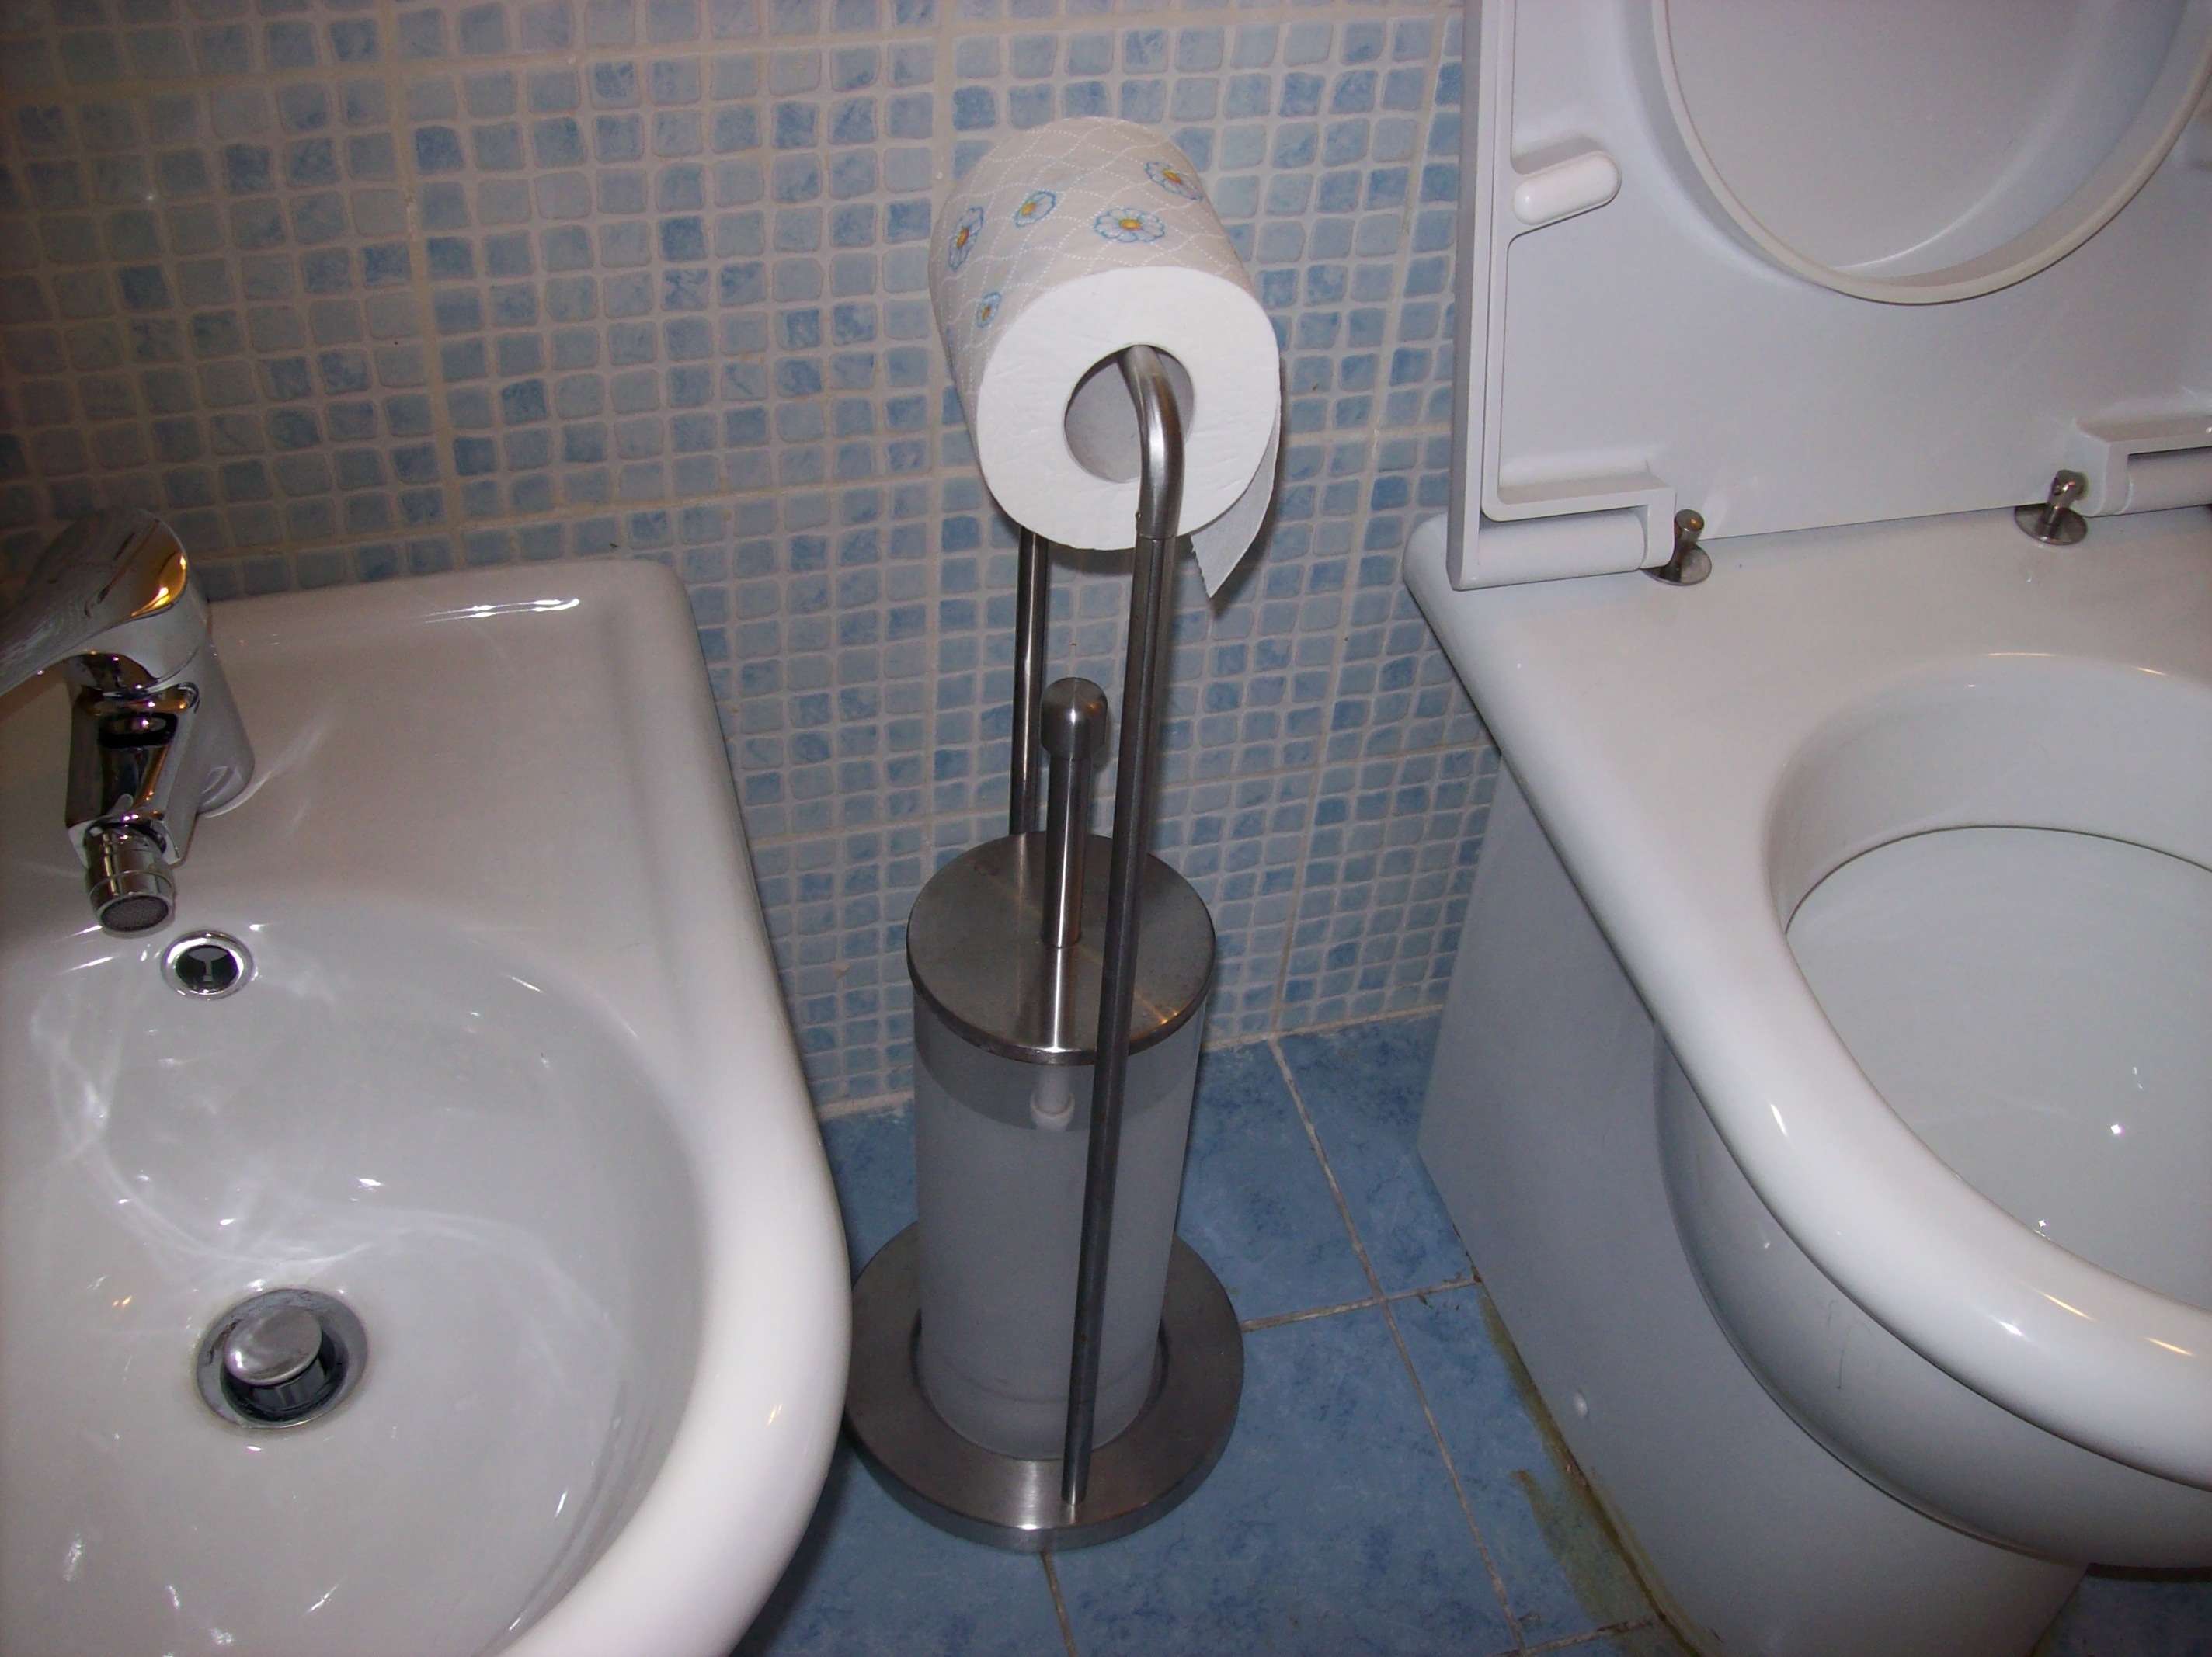 Toilet roll holder - Wikipedia